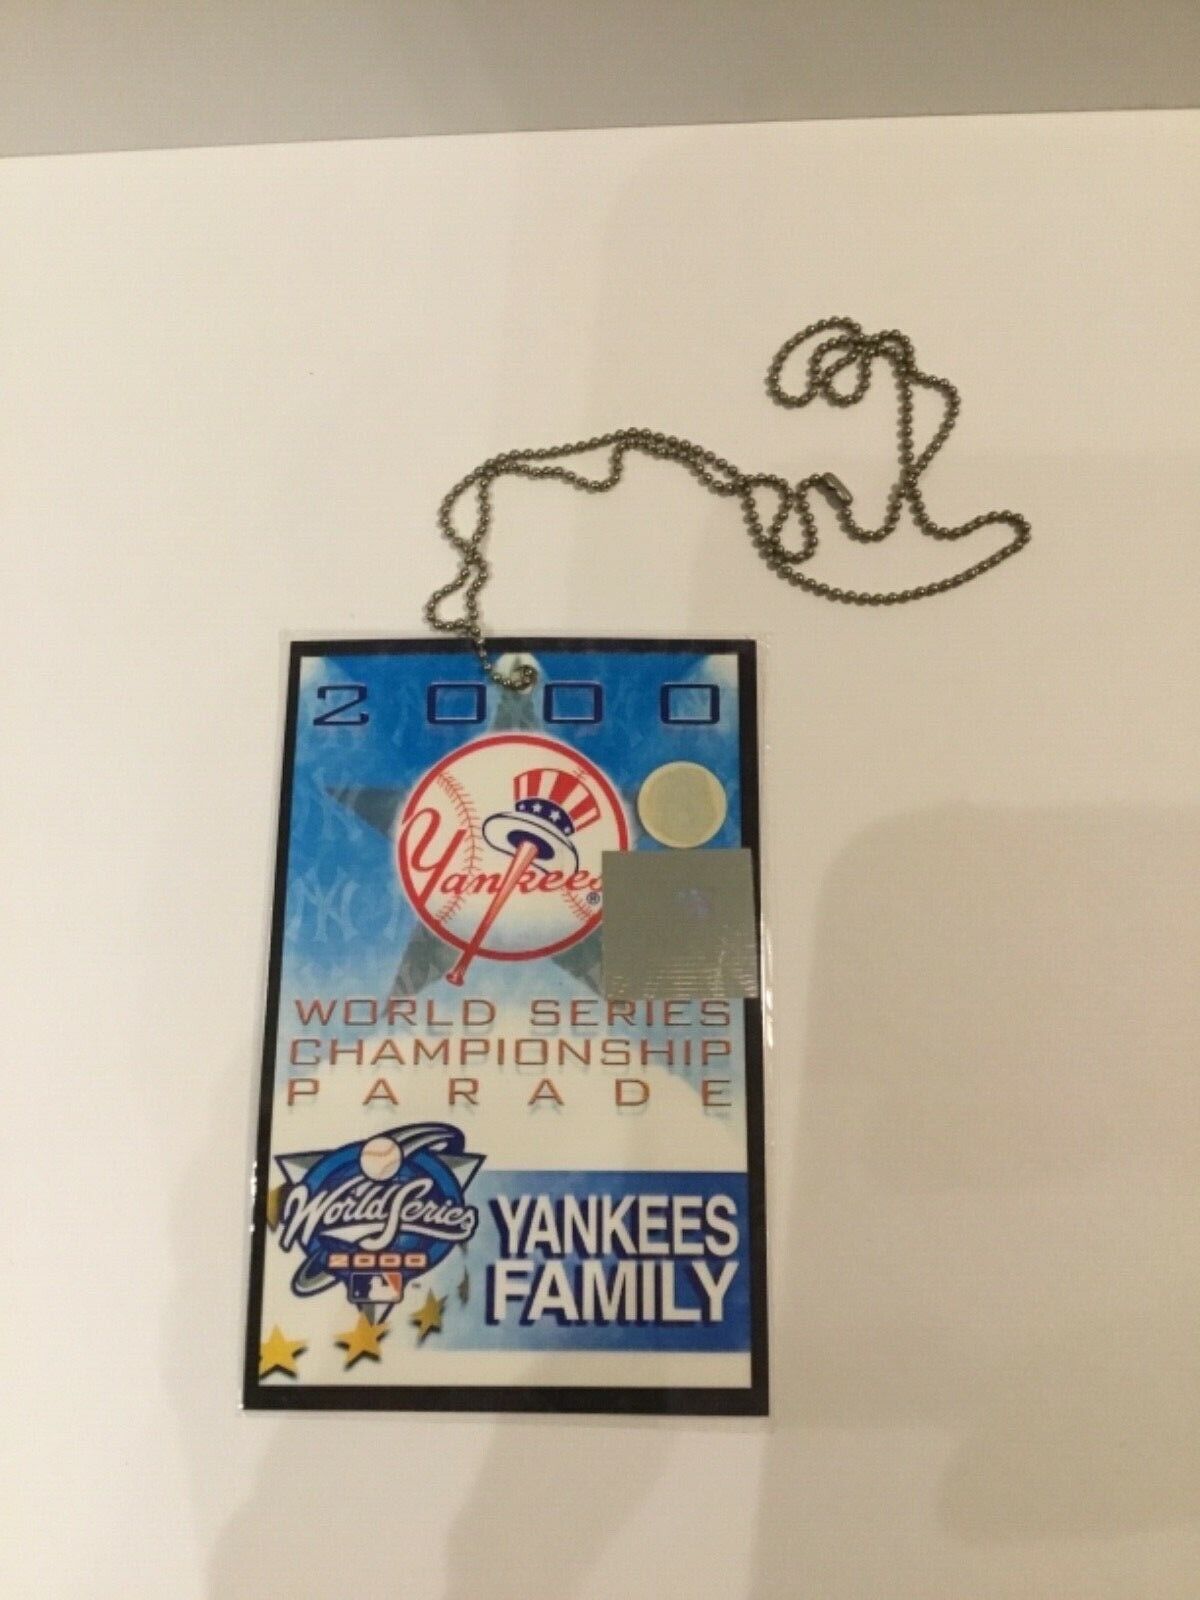 World Series Championship Parade ID 2000 Yankees